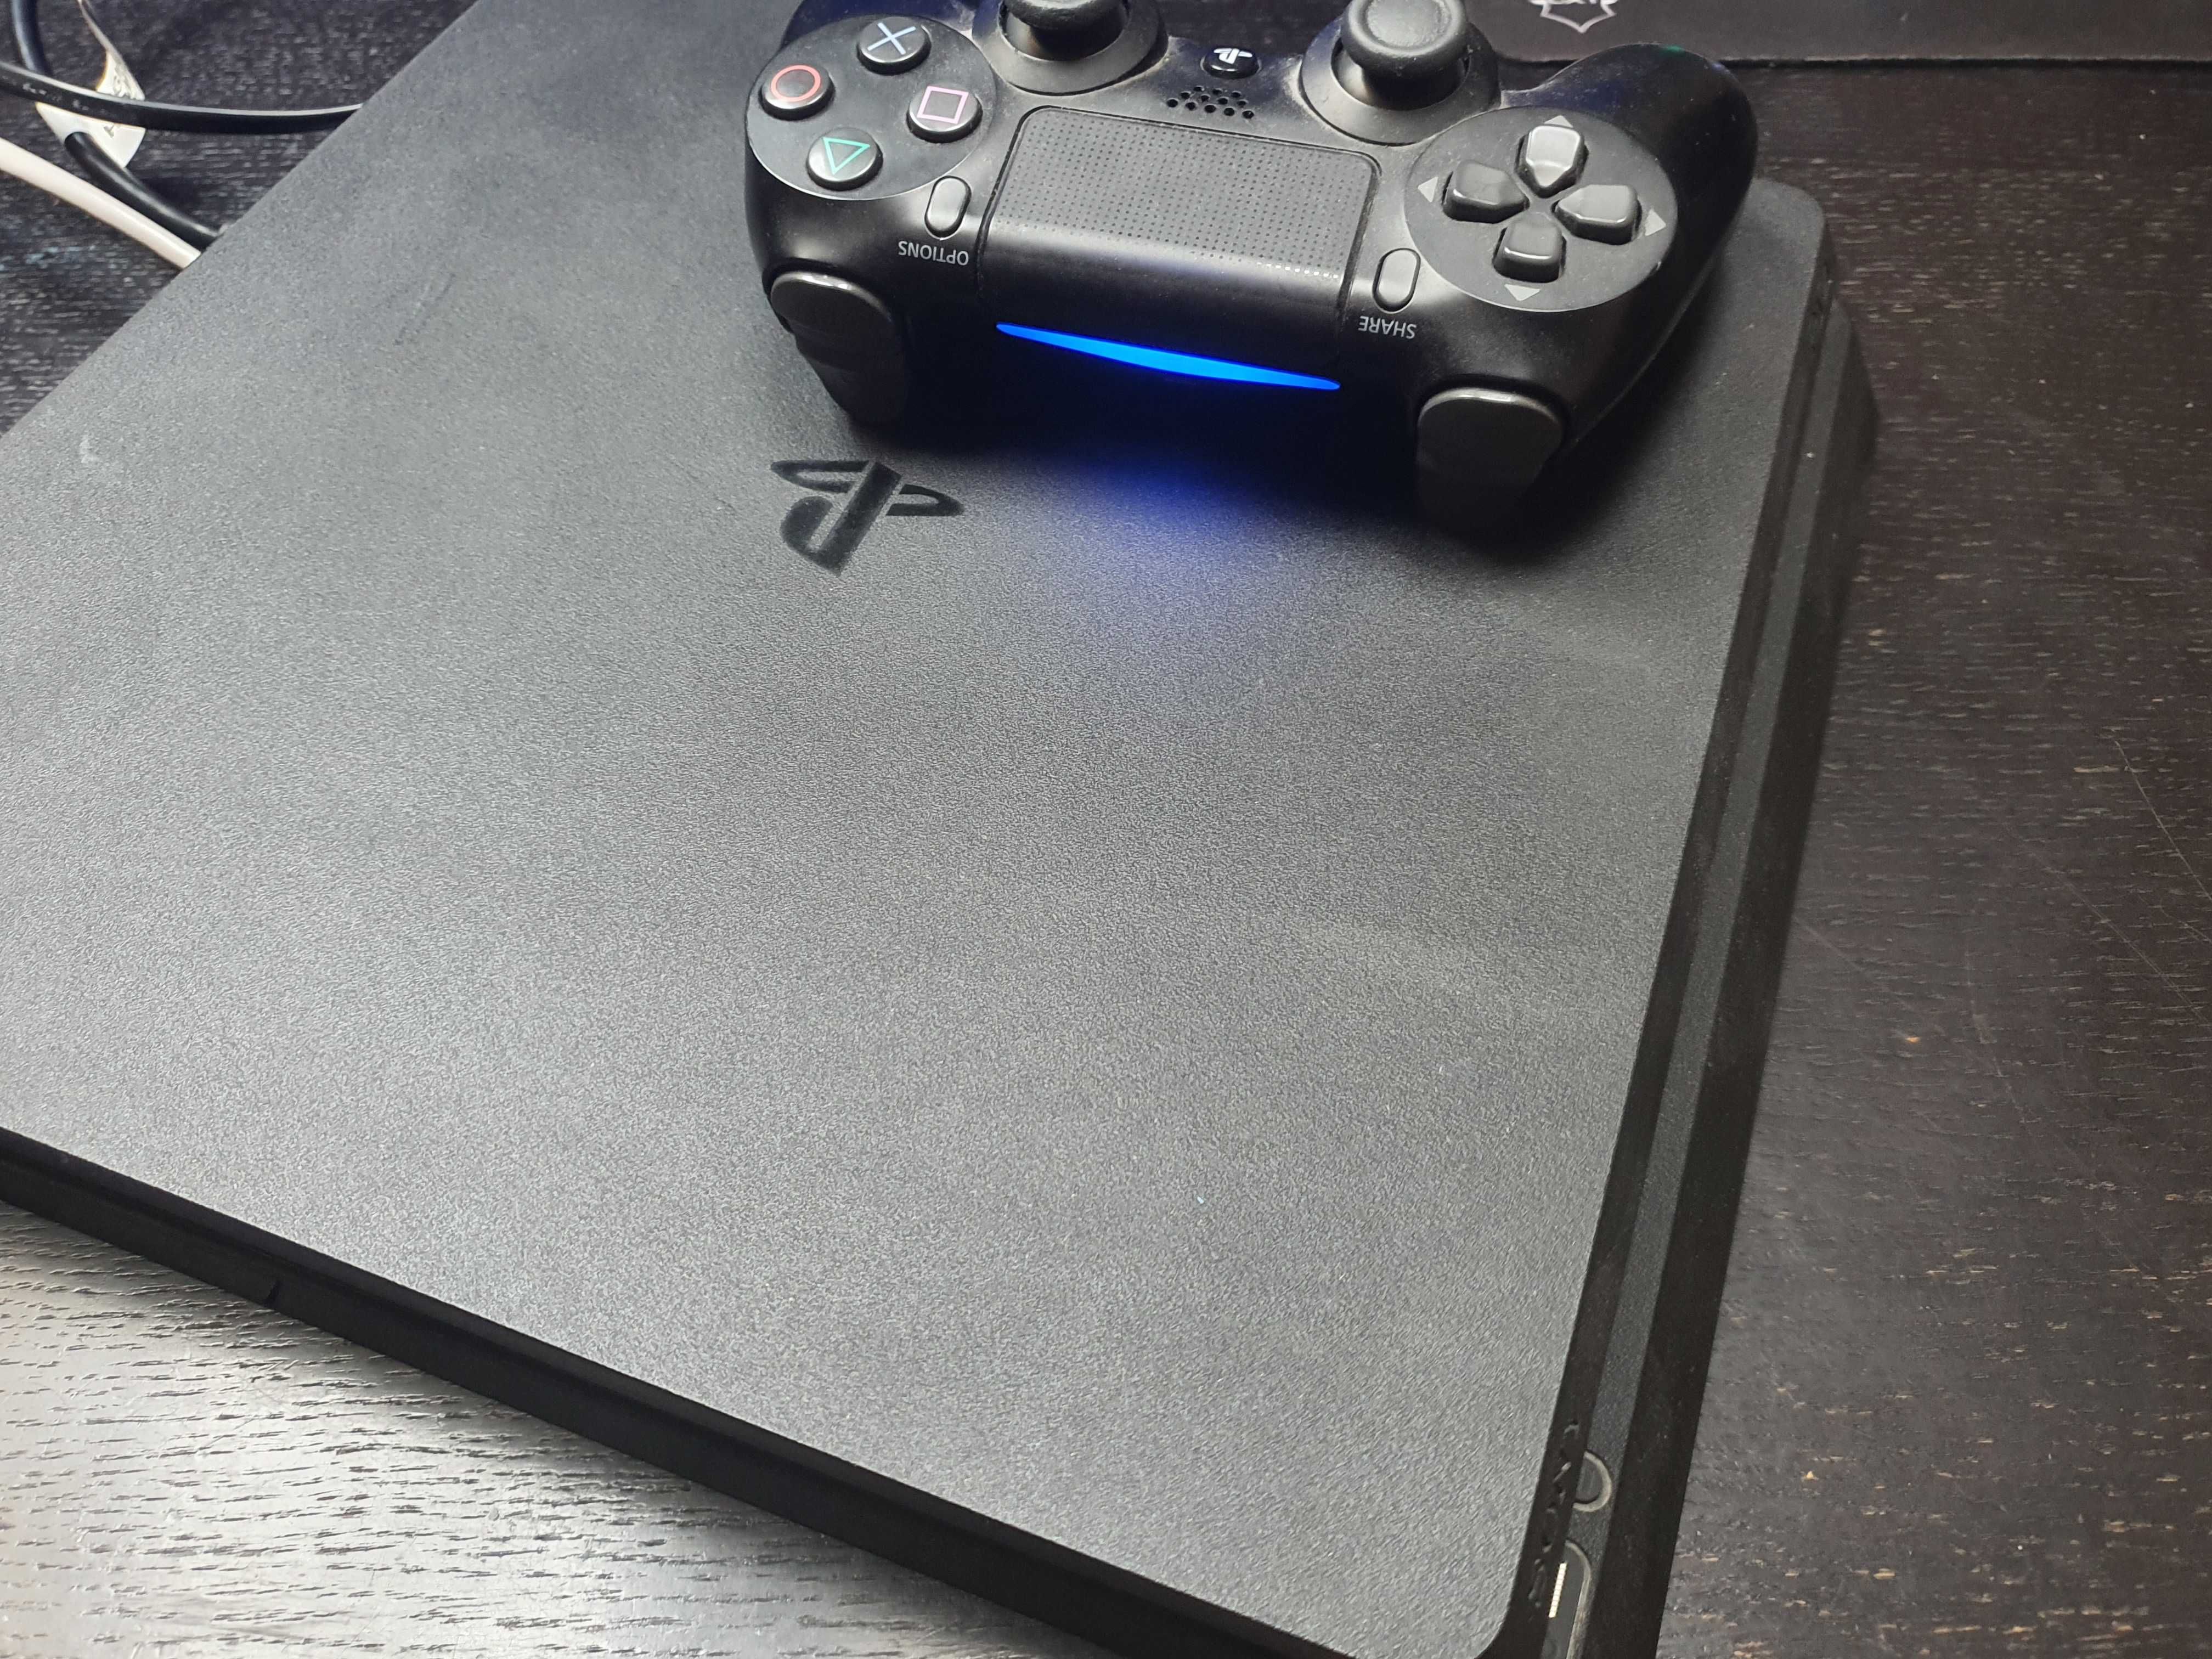 Maneta Playstation 4, controller PS4, Joystick PS4 impecabil